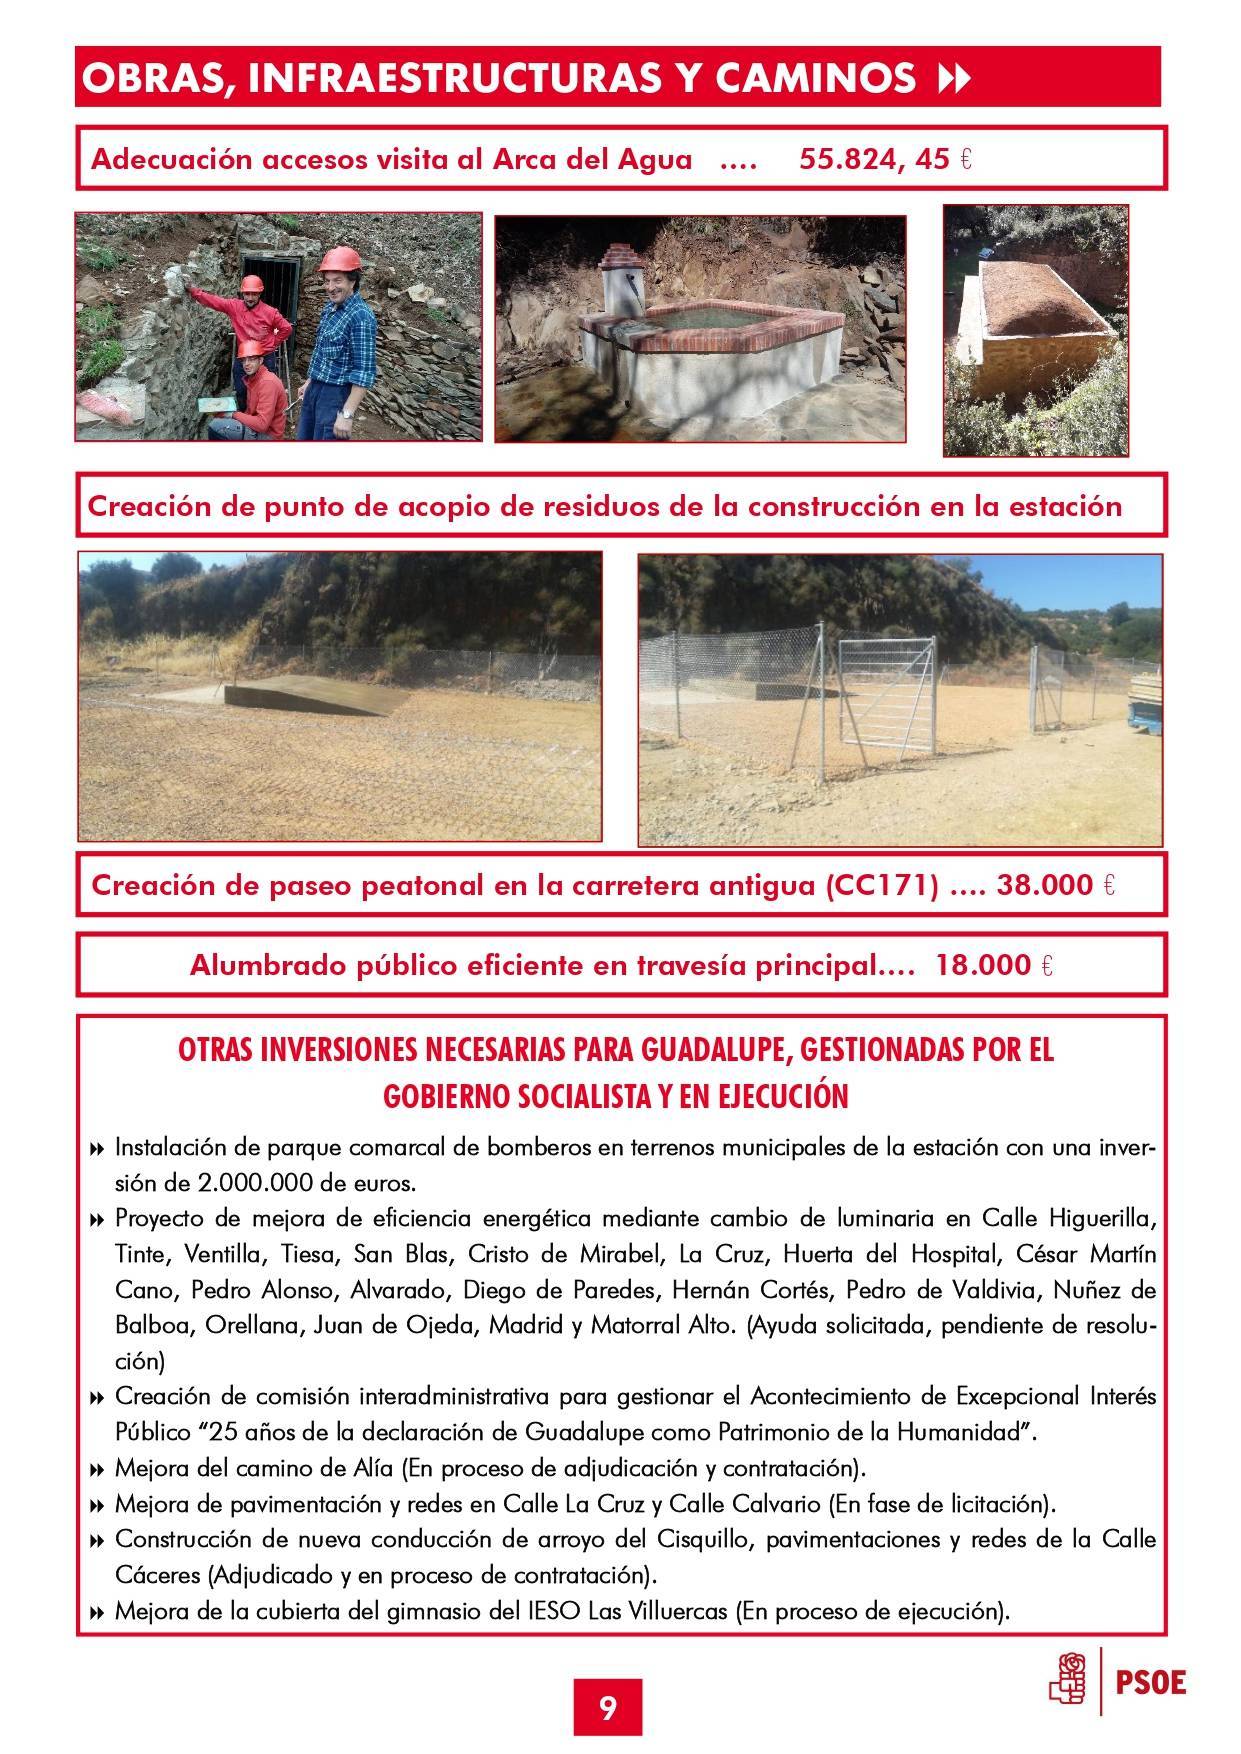 Boletín informativo de gestión municipal 2015-2019 - Guadalupe (Cáceres) 9